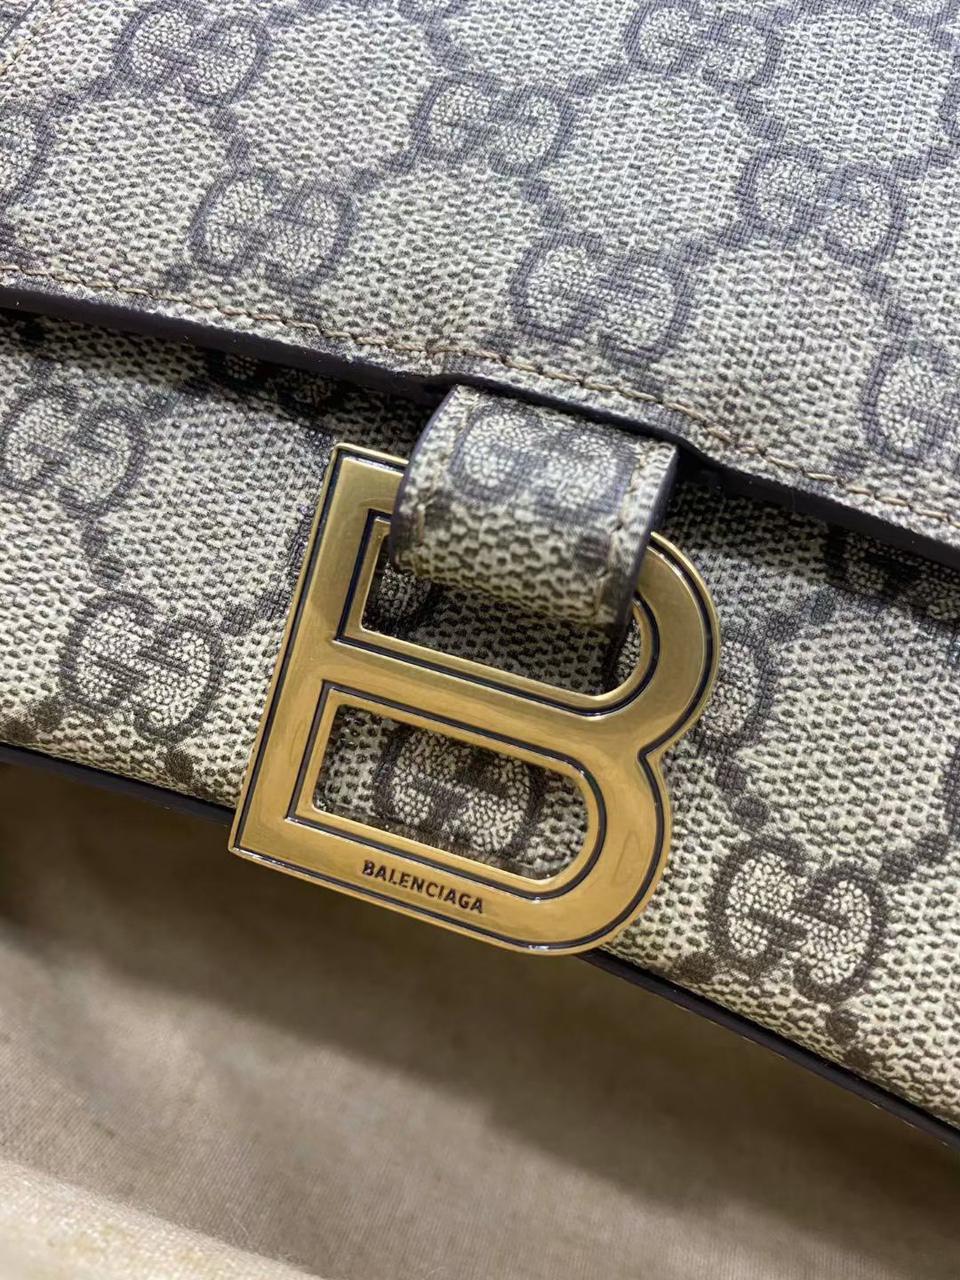 Gucci Balenciaga The Hacker Project Small Hourglass Bag - AlimorLuxury